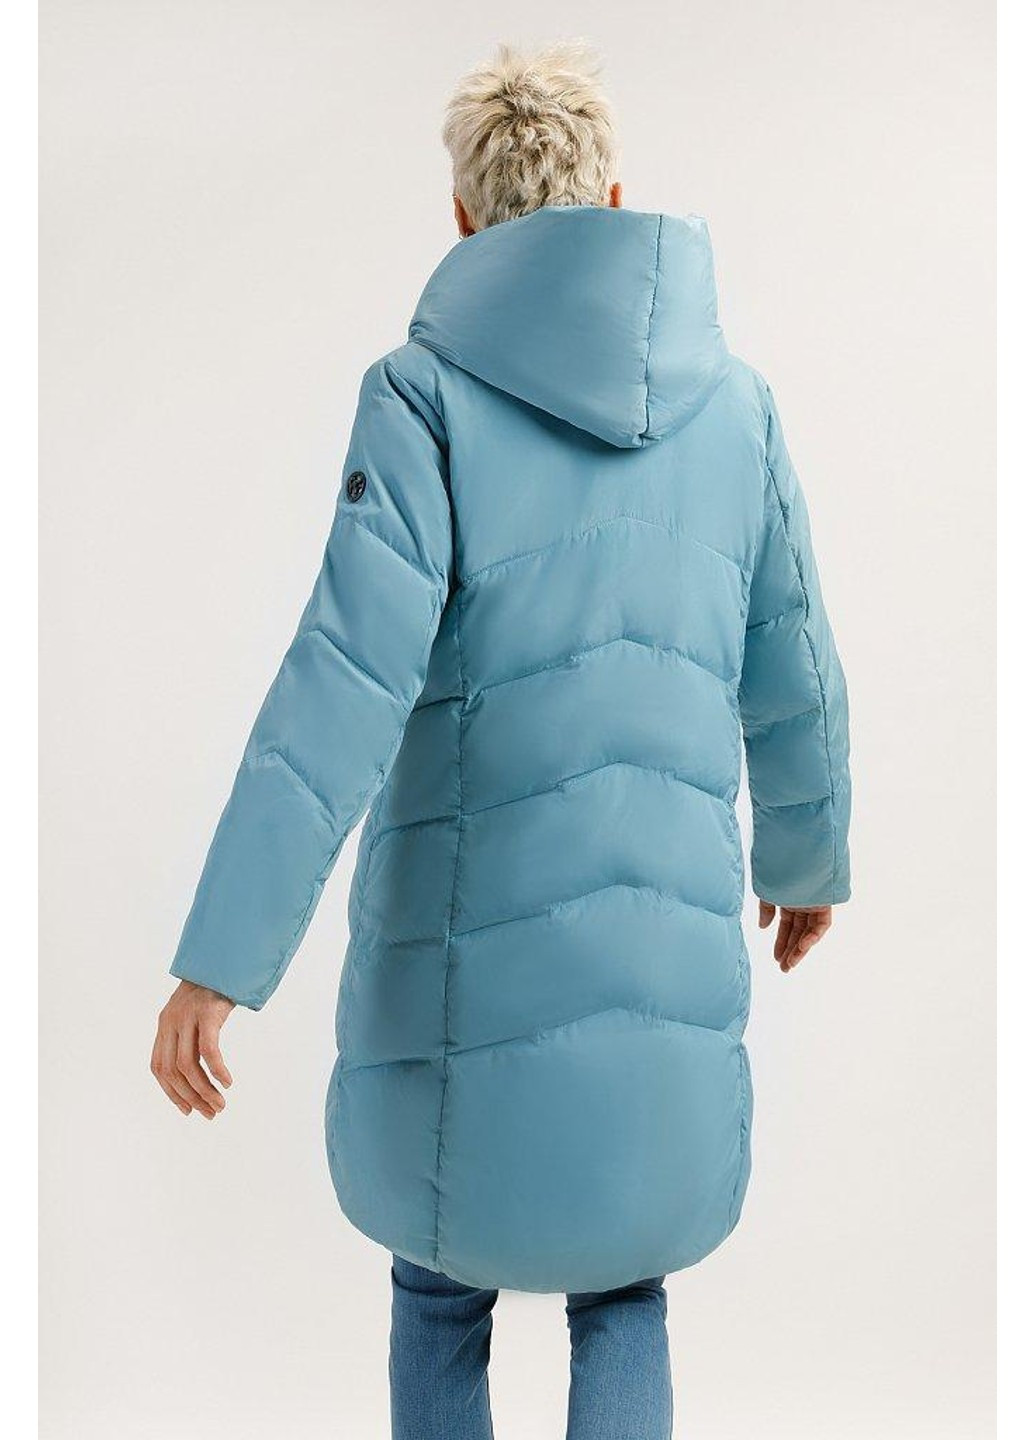 Голубая зимняя зимняя куртка a19-11010-124 Finn Flare